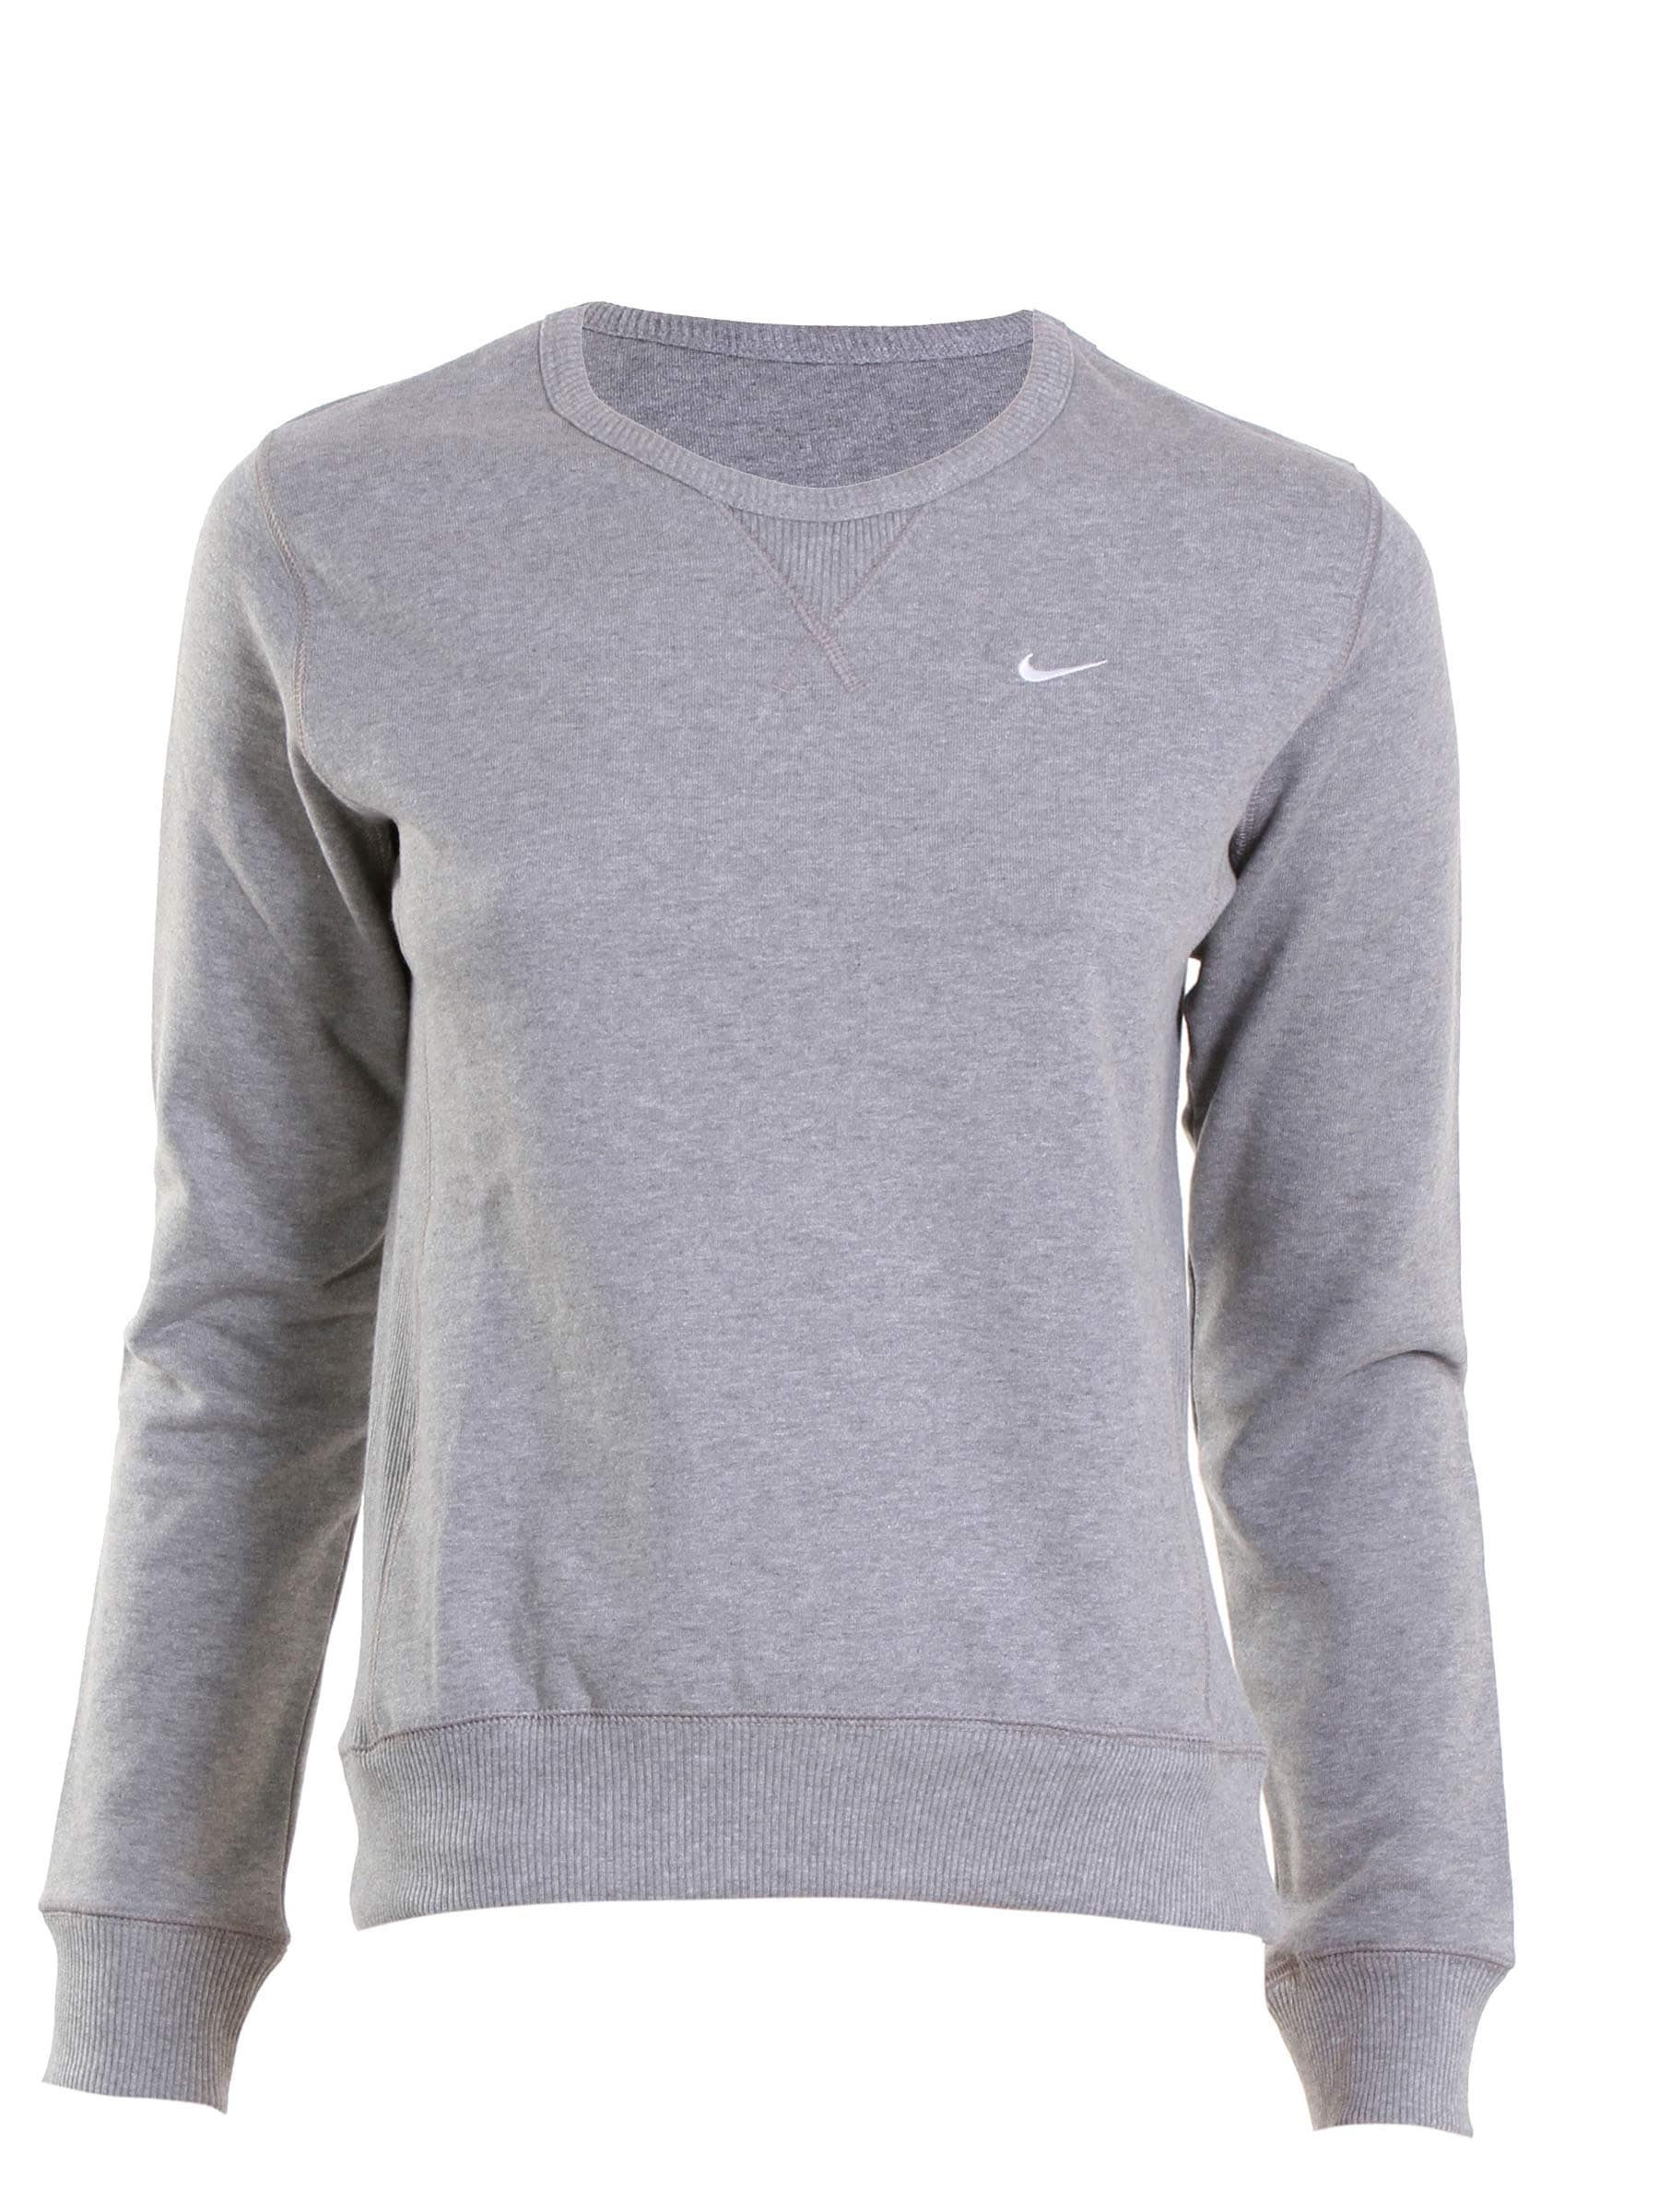 Nike Grey Women Sweatshirt